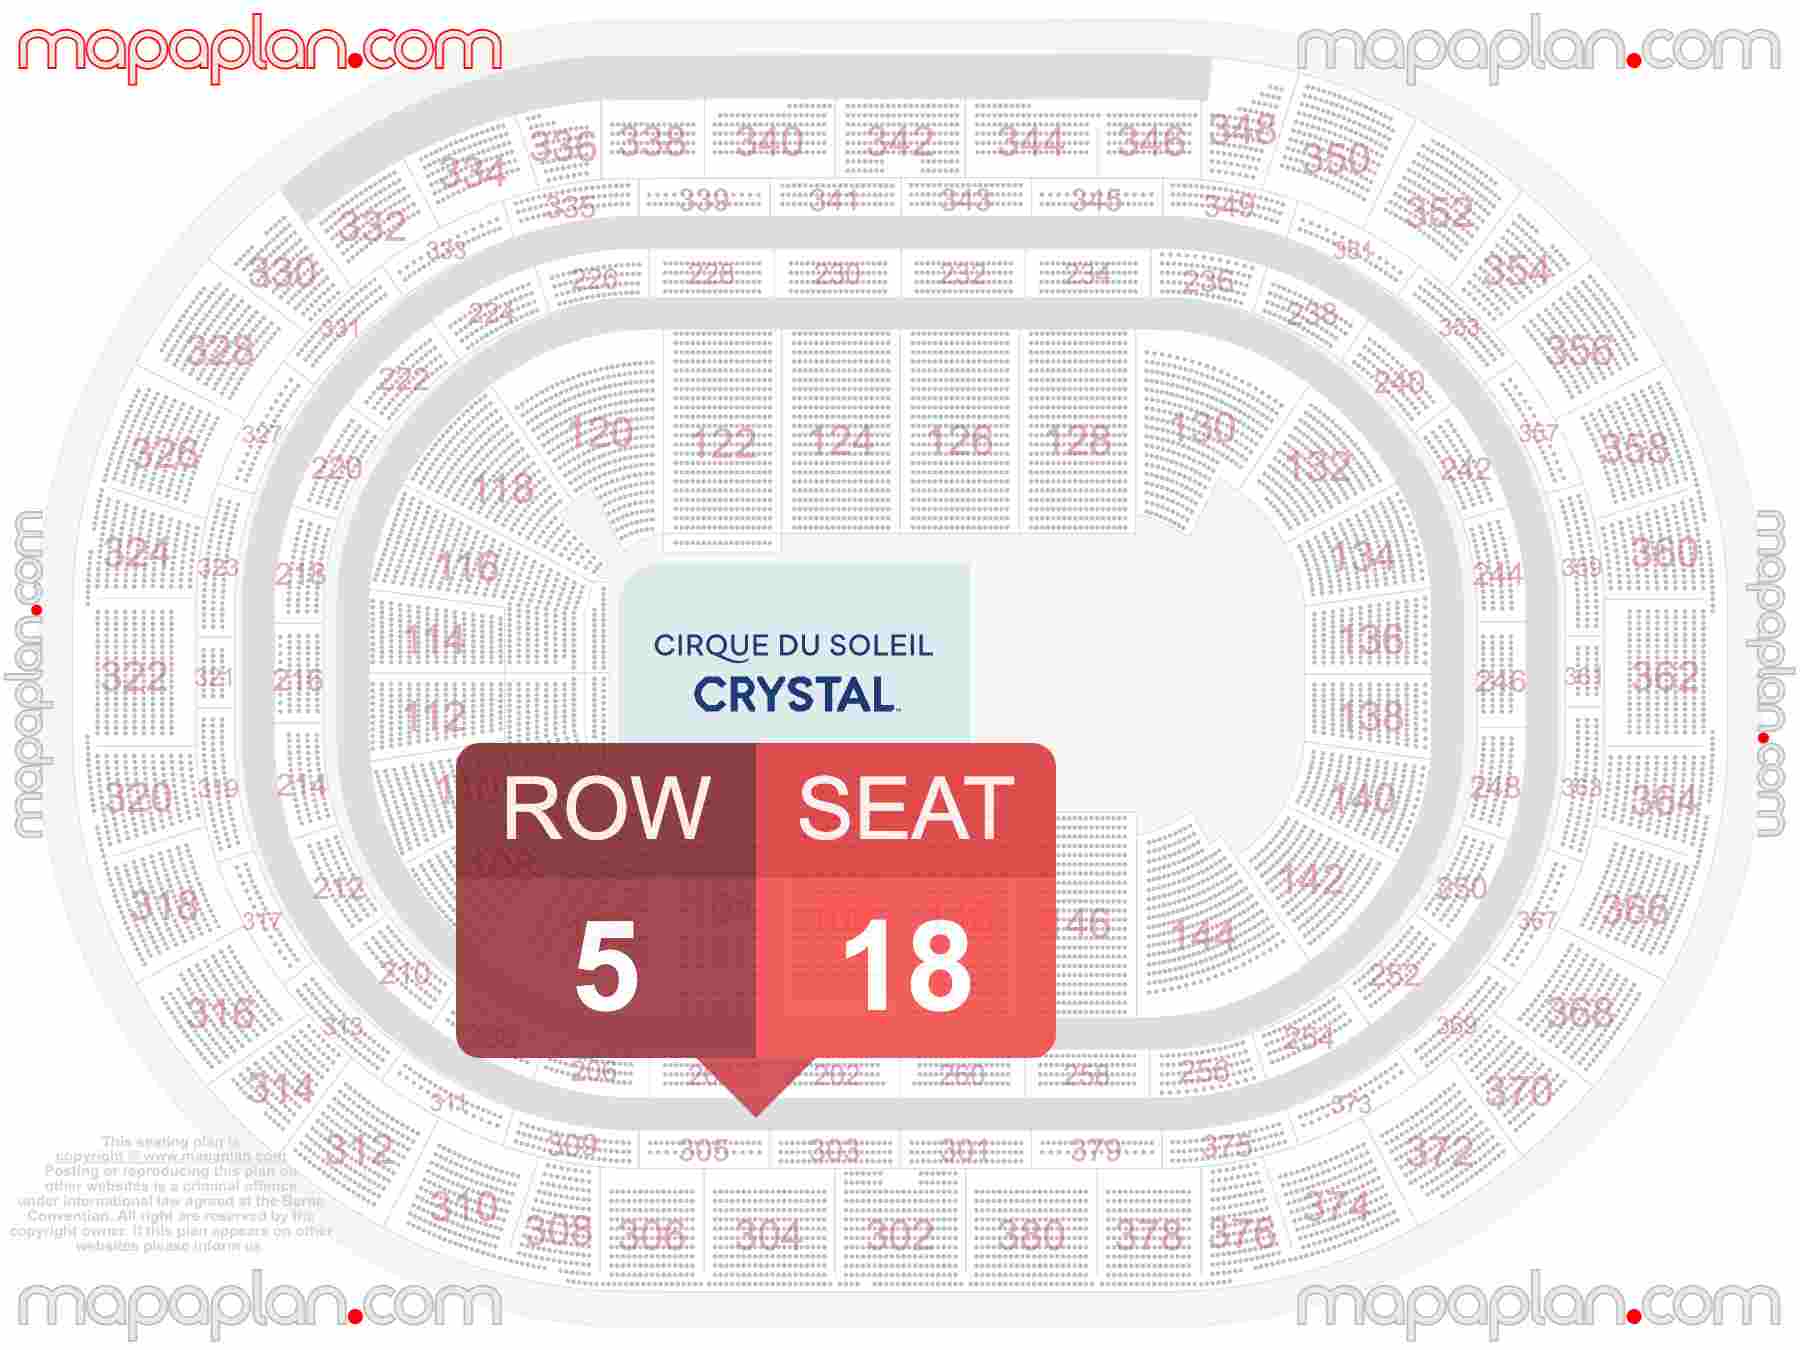 Denver Ball Arena seating chart Cirque du Soleil 3d virtual view seat locator plan - Navigate seat numbers per row